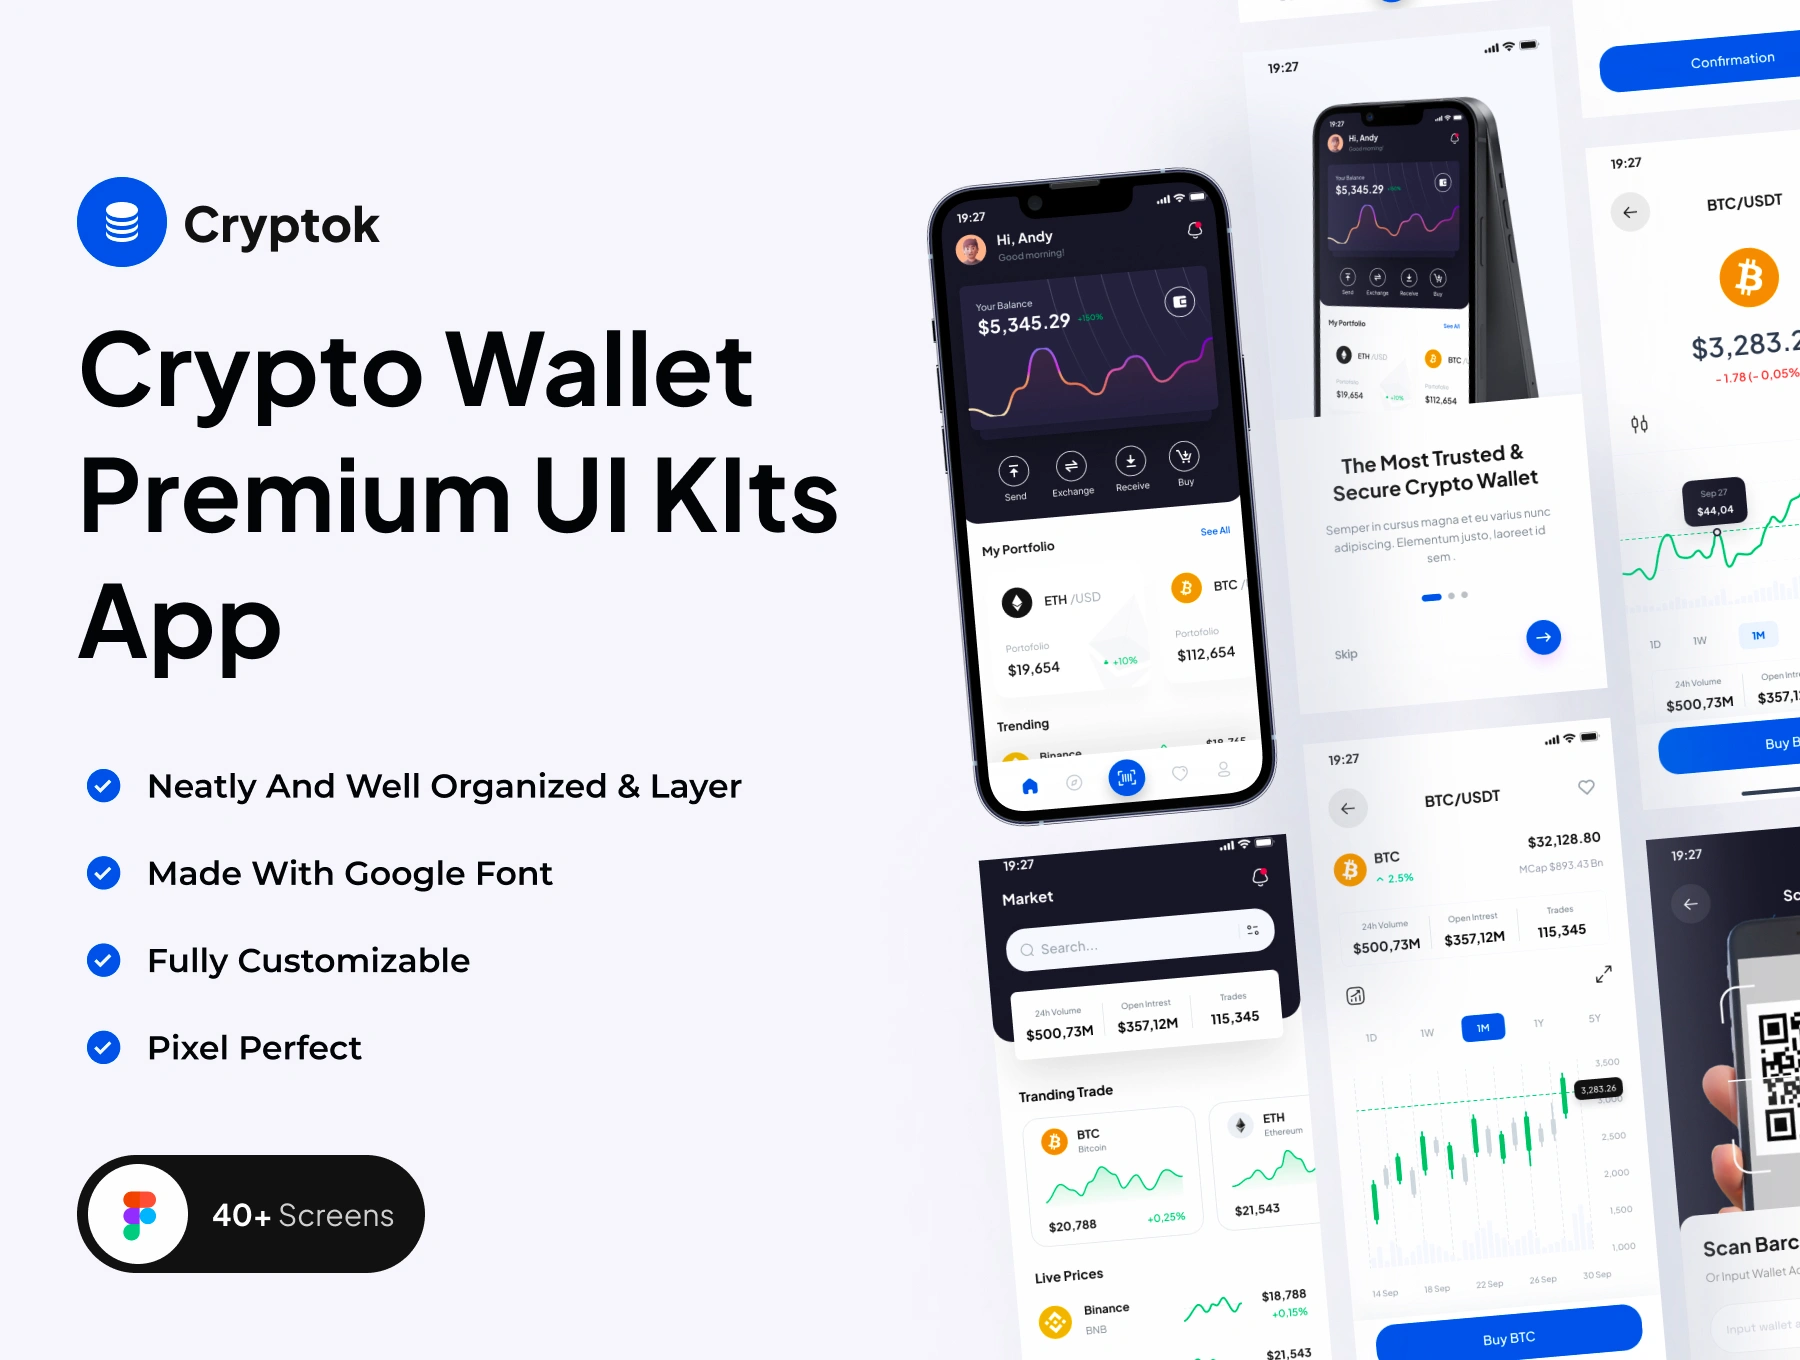 [VIP] Cryptok: Crypto Wallet Premium UI Kits App